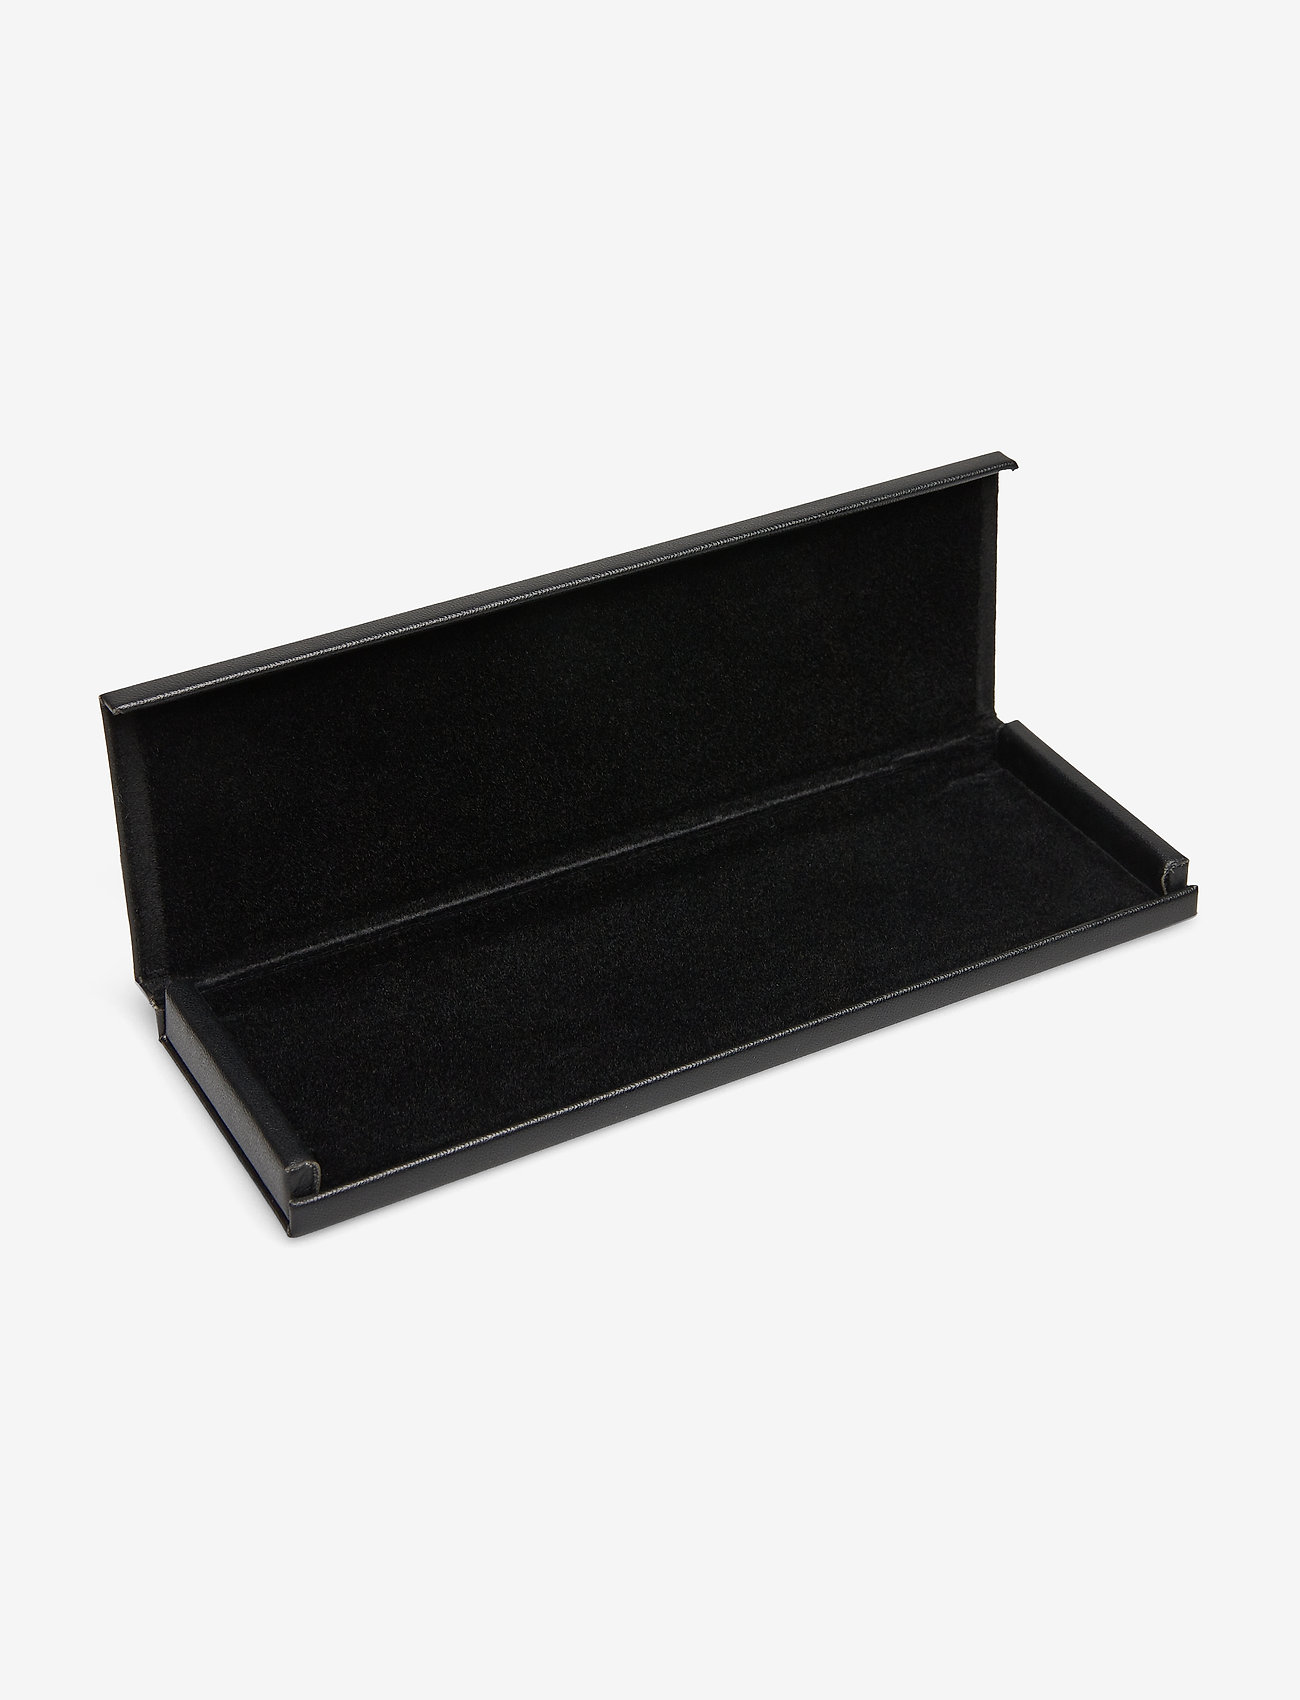 Design Letters - Personal pencil case - die niedrigsten preise - black - 1